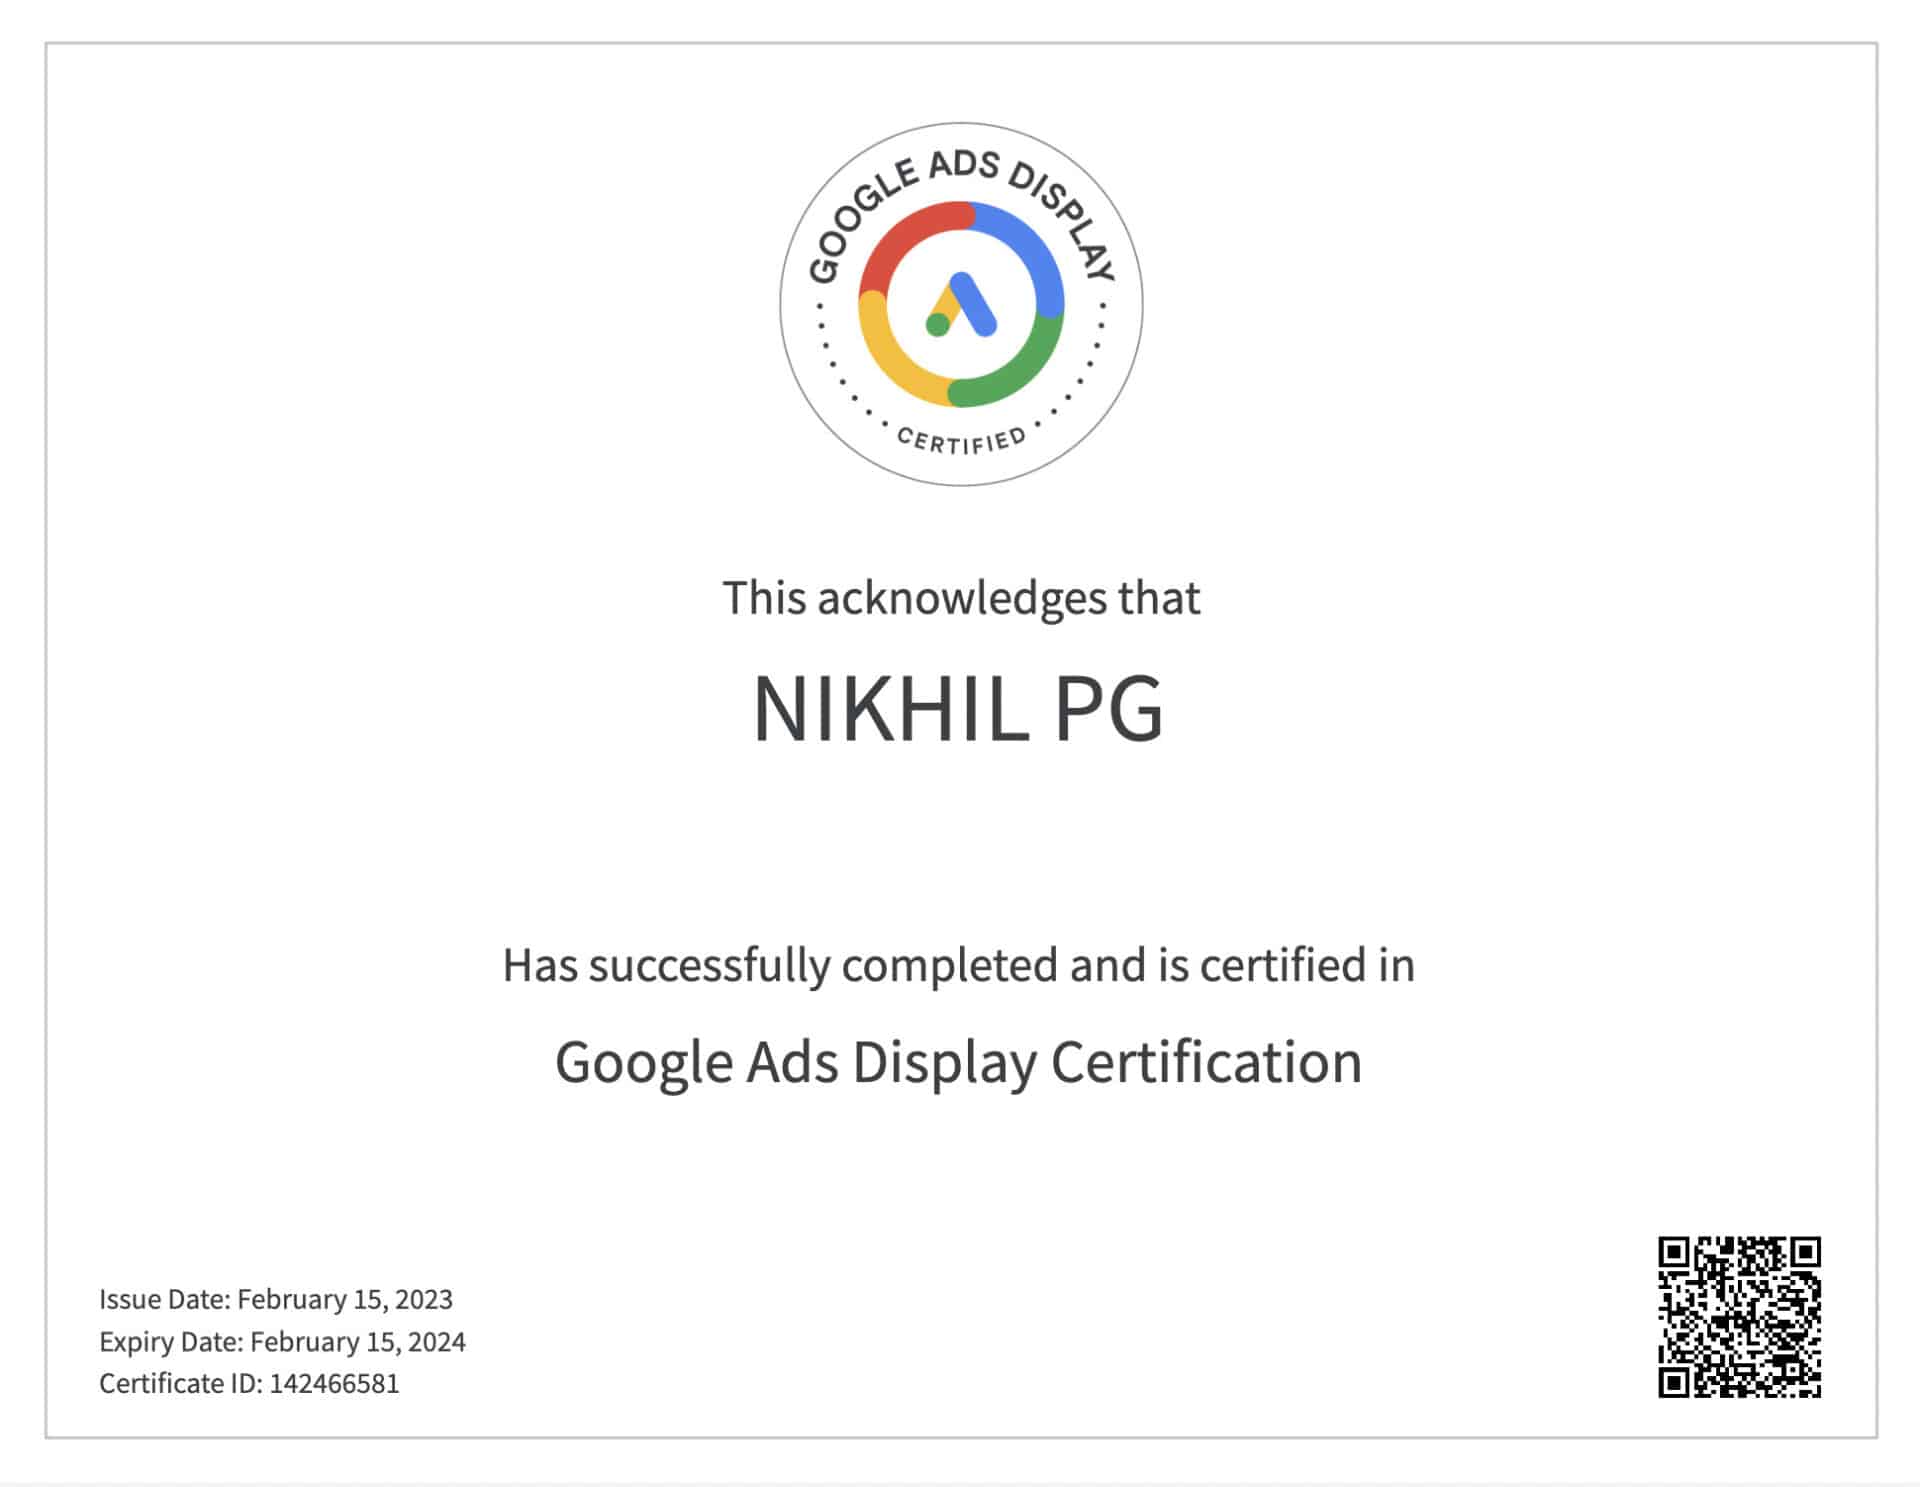 Google-Certified-DigitalMarketing-Specialist